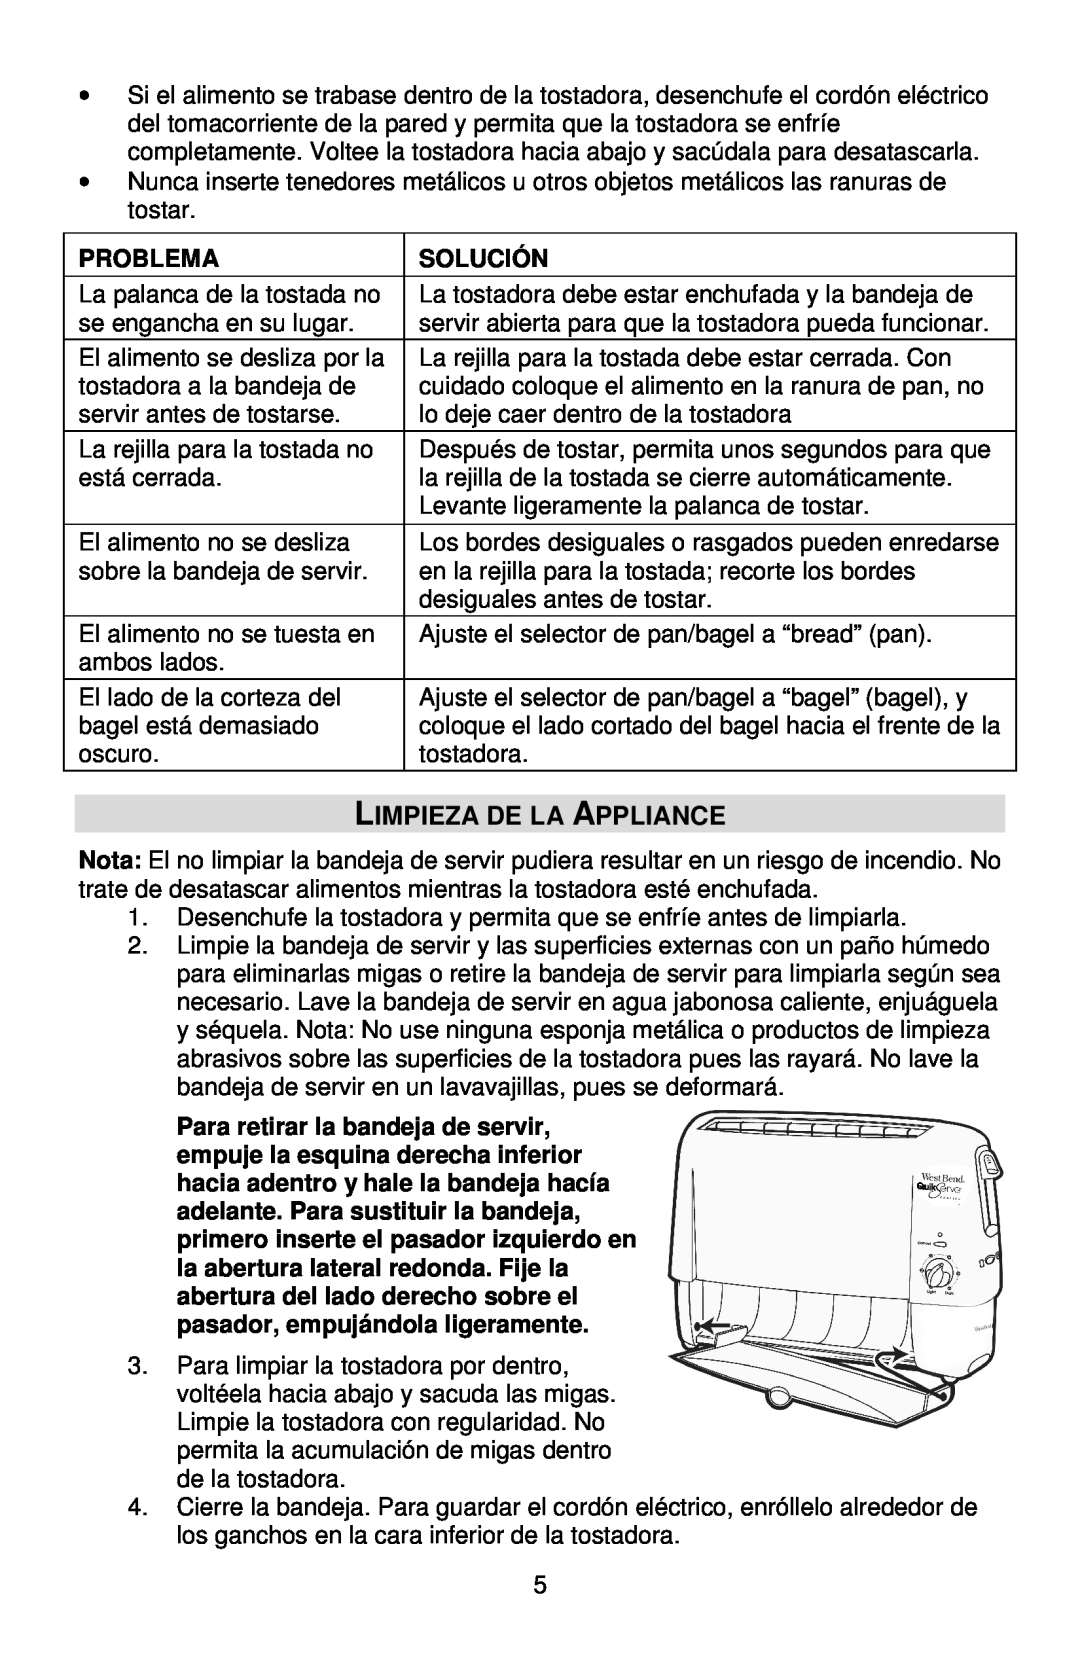 West Bend 643-050 instruction manual Limpieza De La Appliance, Problema, Solución 